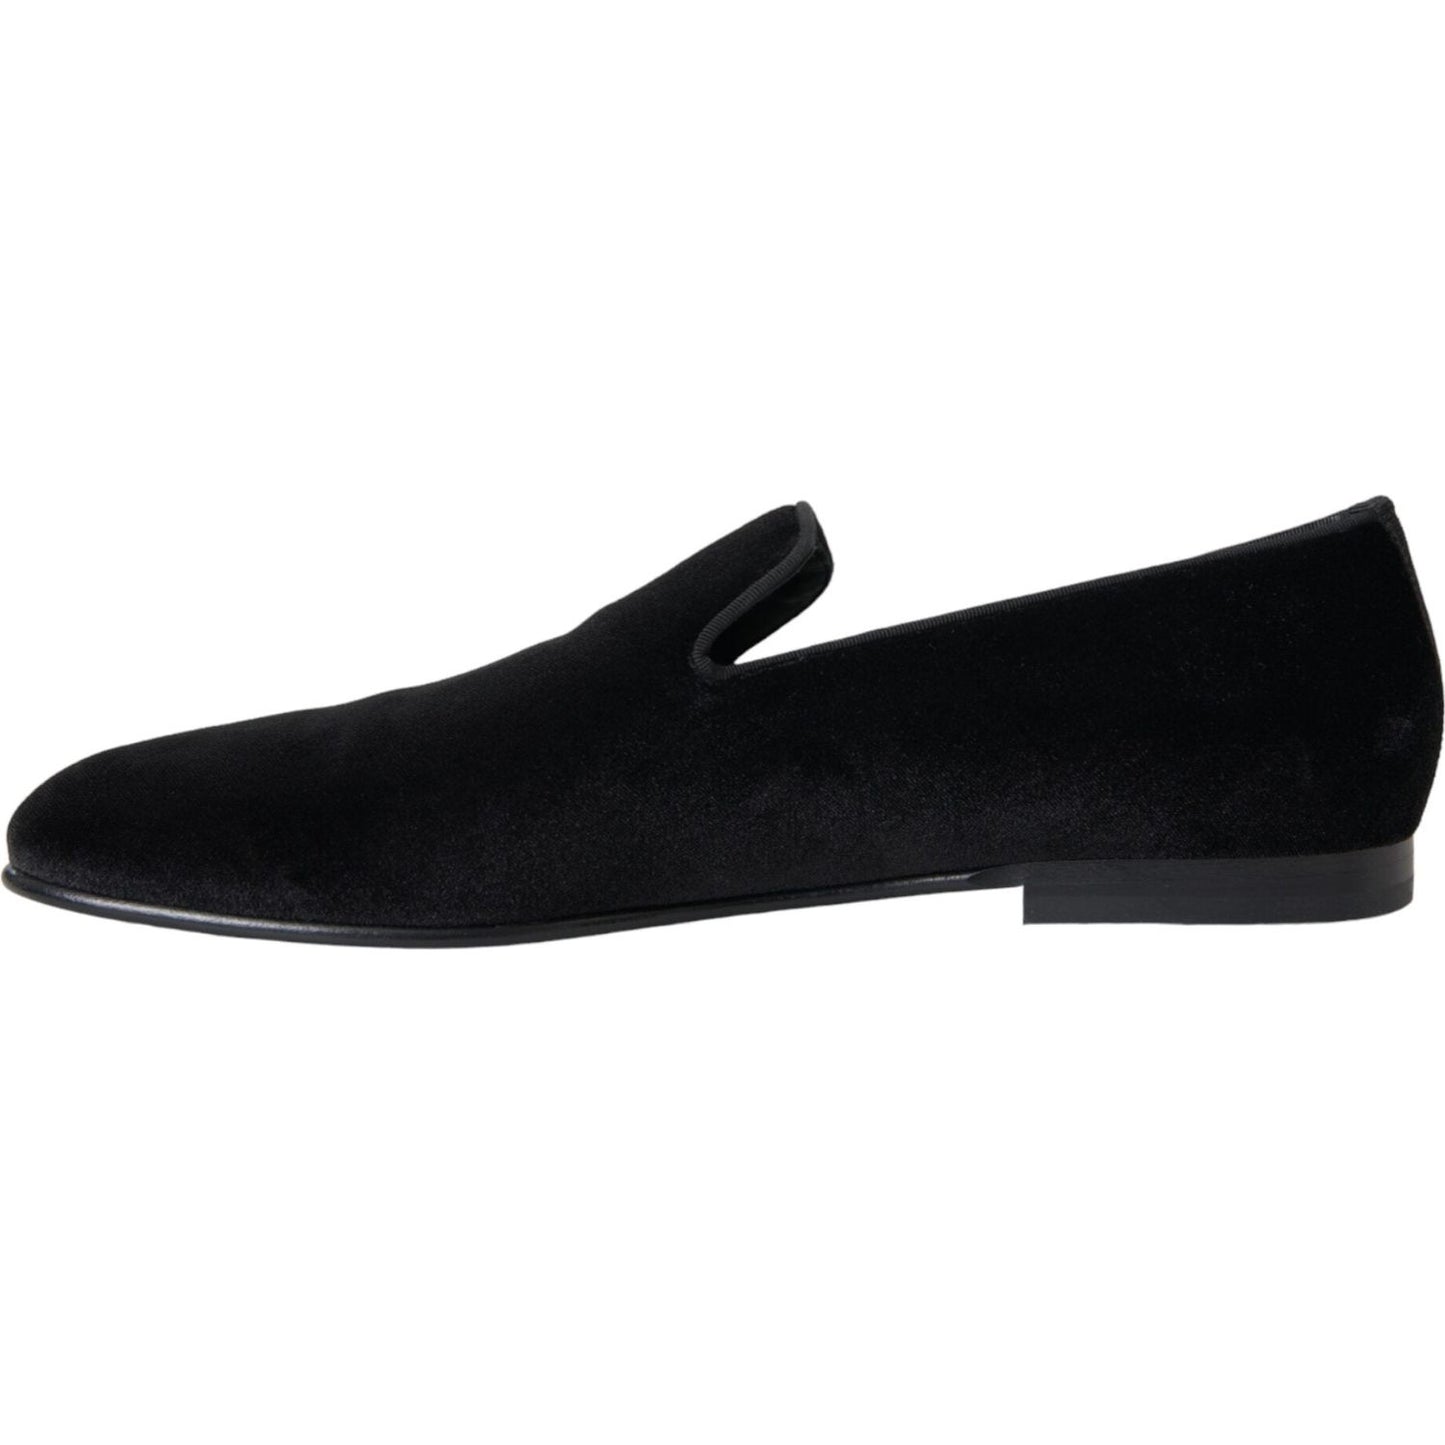 Black Suede Loafers Formal Dress Slip On Shoes Dolce & Gabbana